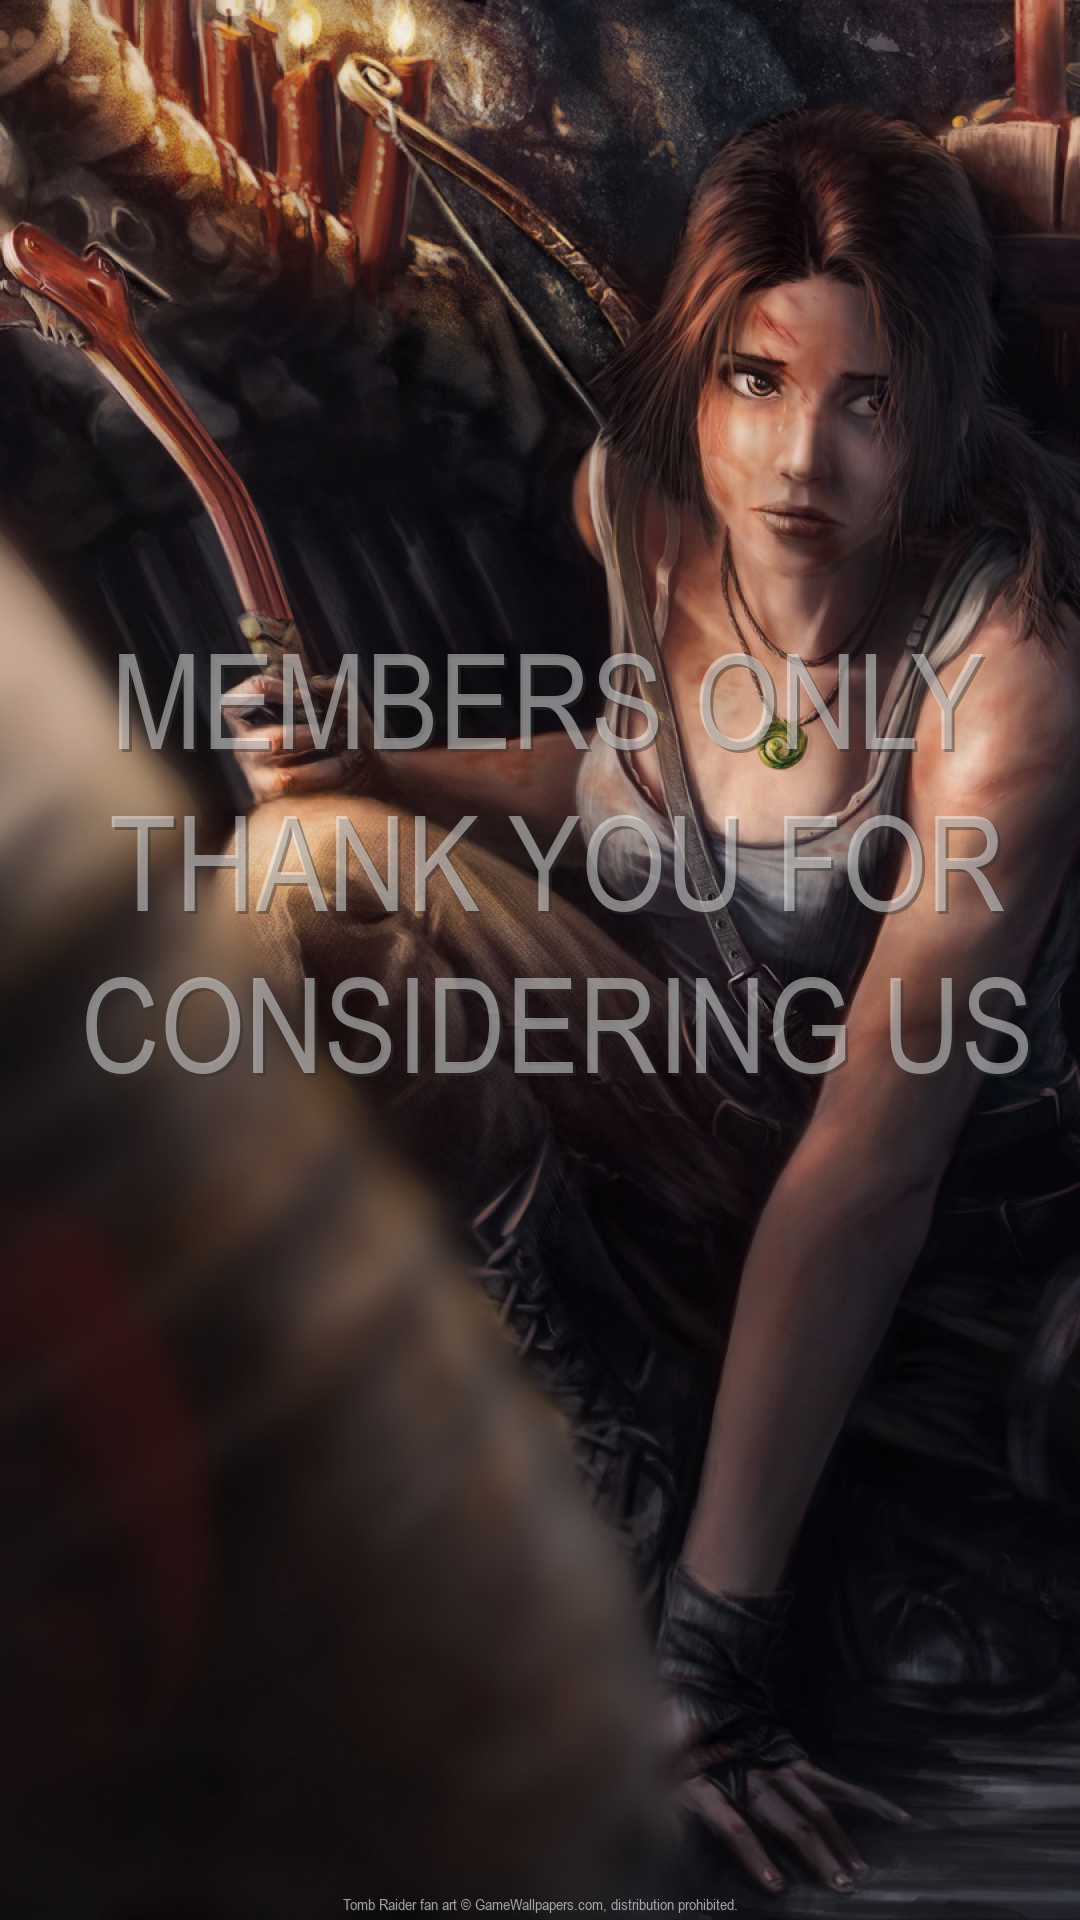 Tomb Raider fan art 1080p%20Vertical Mobile wallpaper or background 03